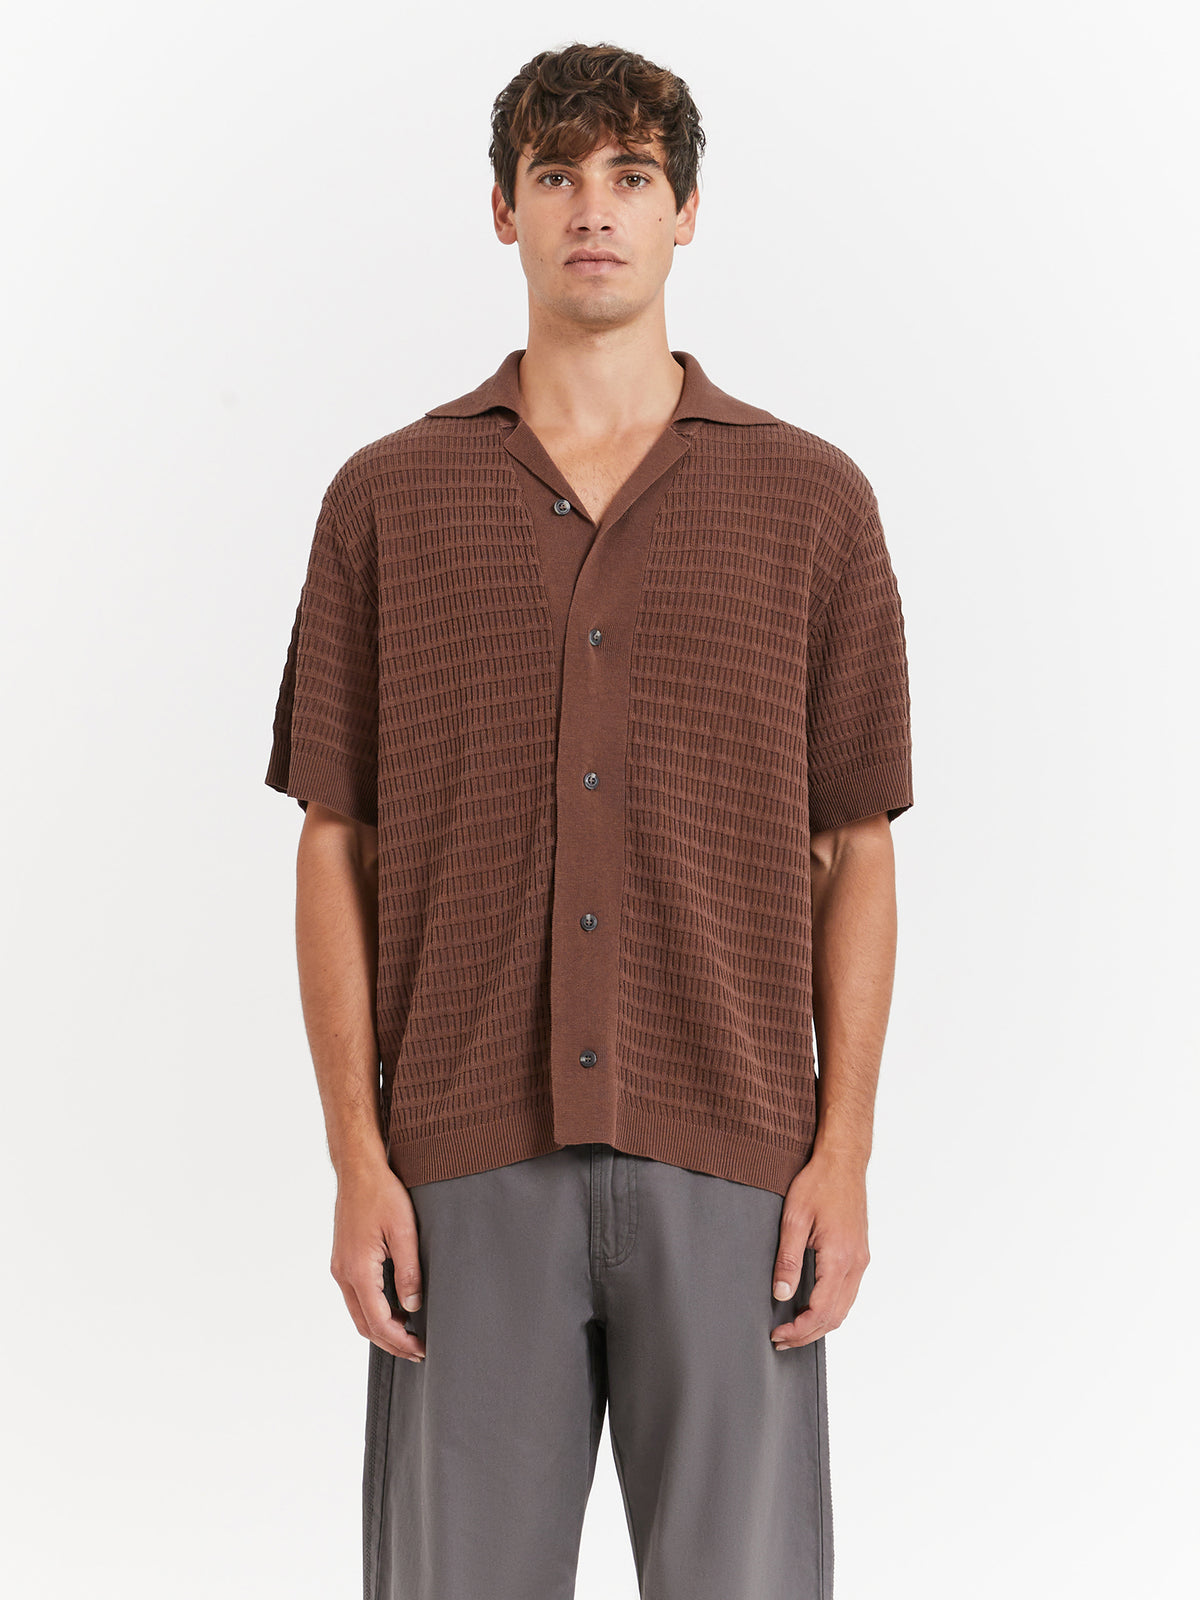 Zanito Knit Shirt in Taupe